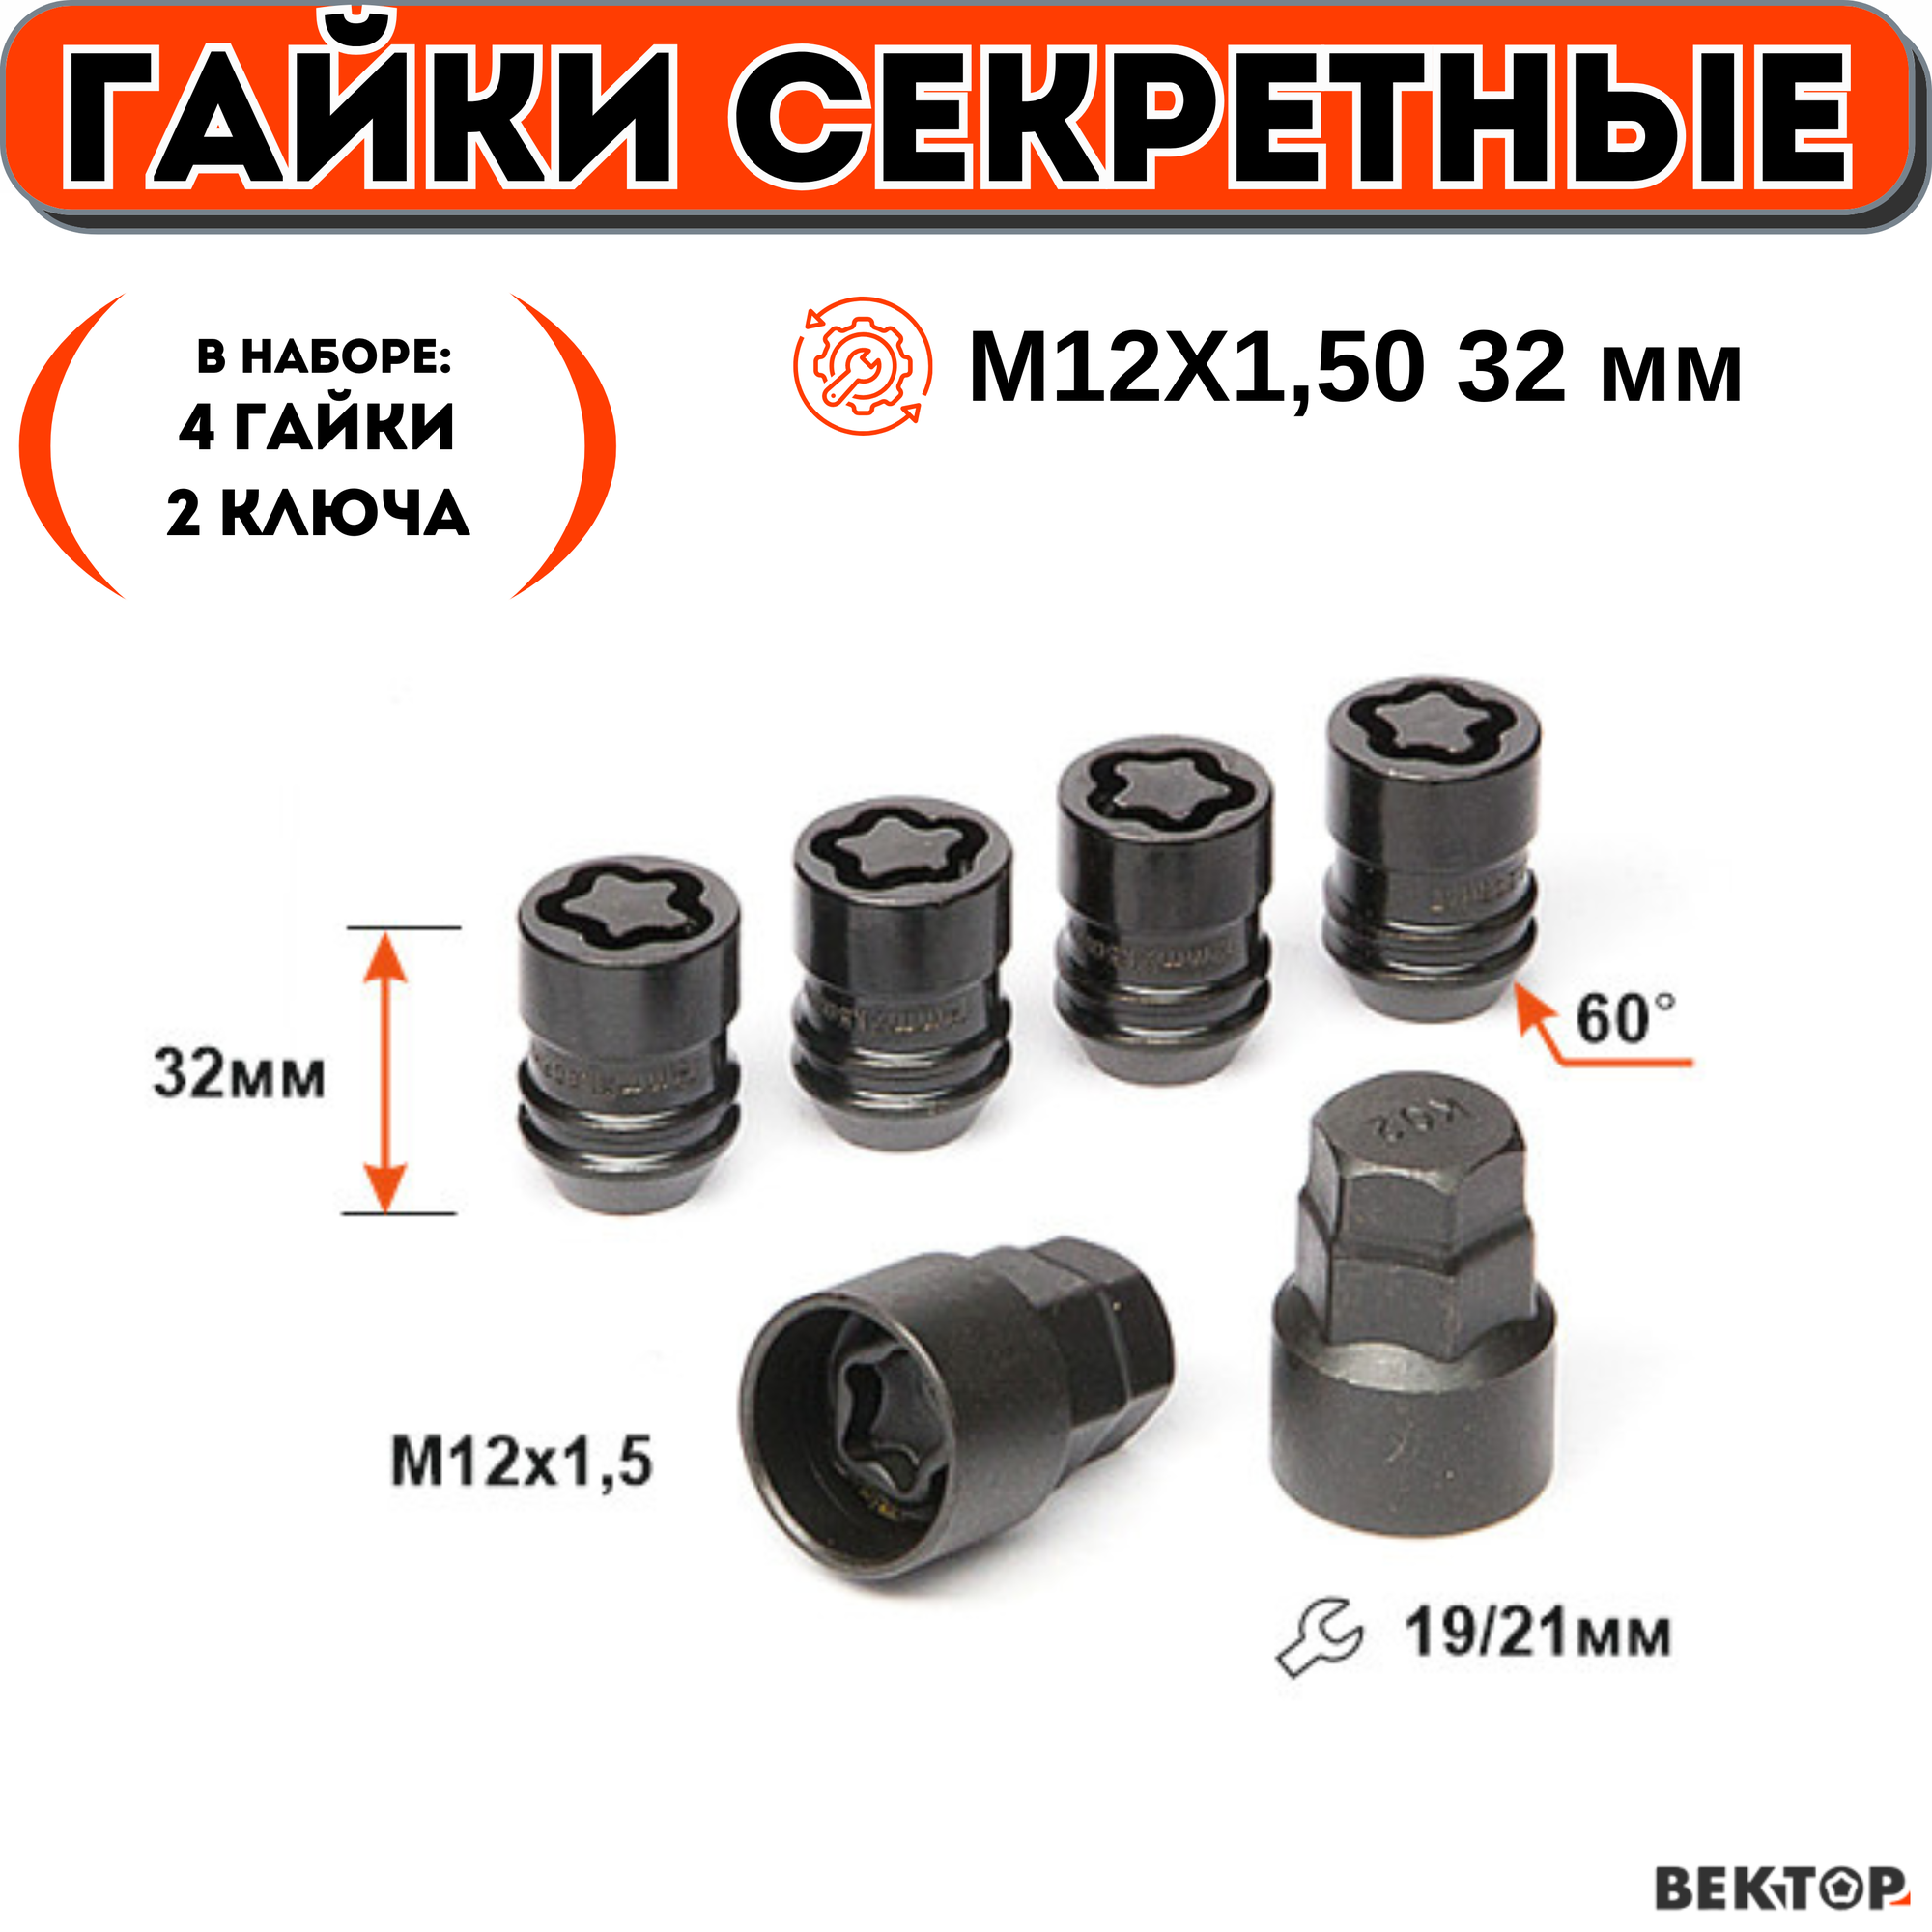 Комплект гайки секретки M12X1,50 Высота 32 мм, Черный хром, Конус, (набор 4 гайки+2 ключа)